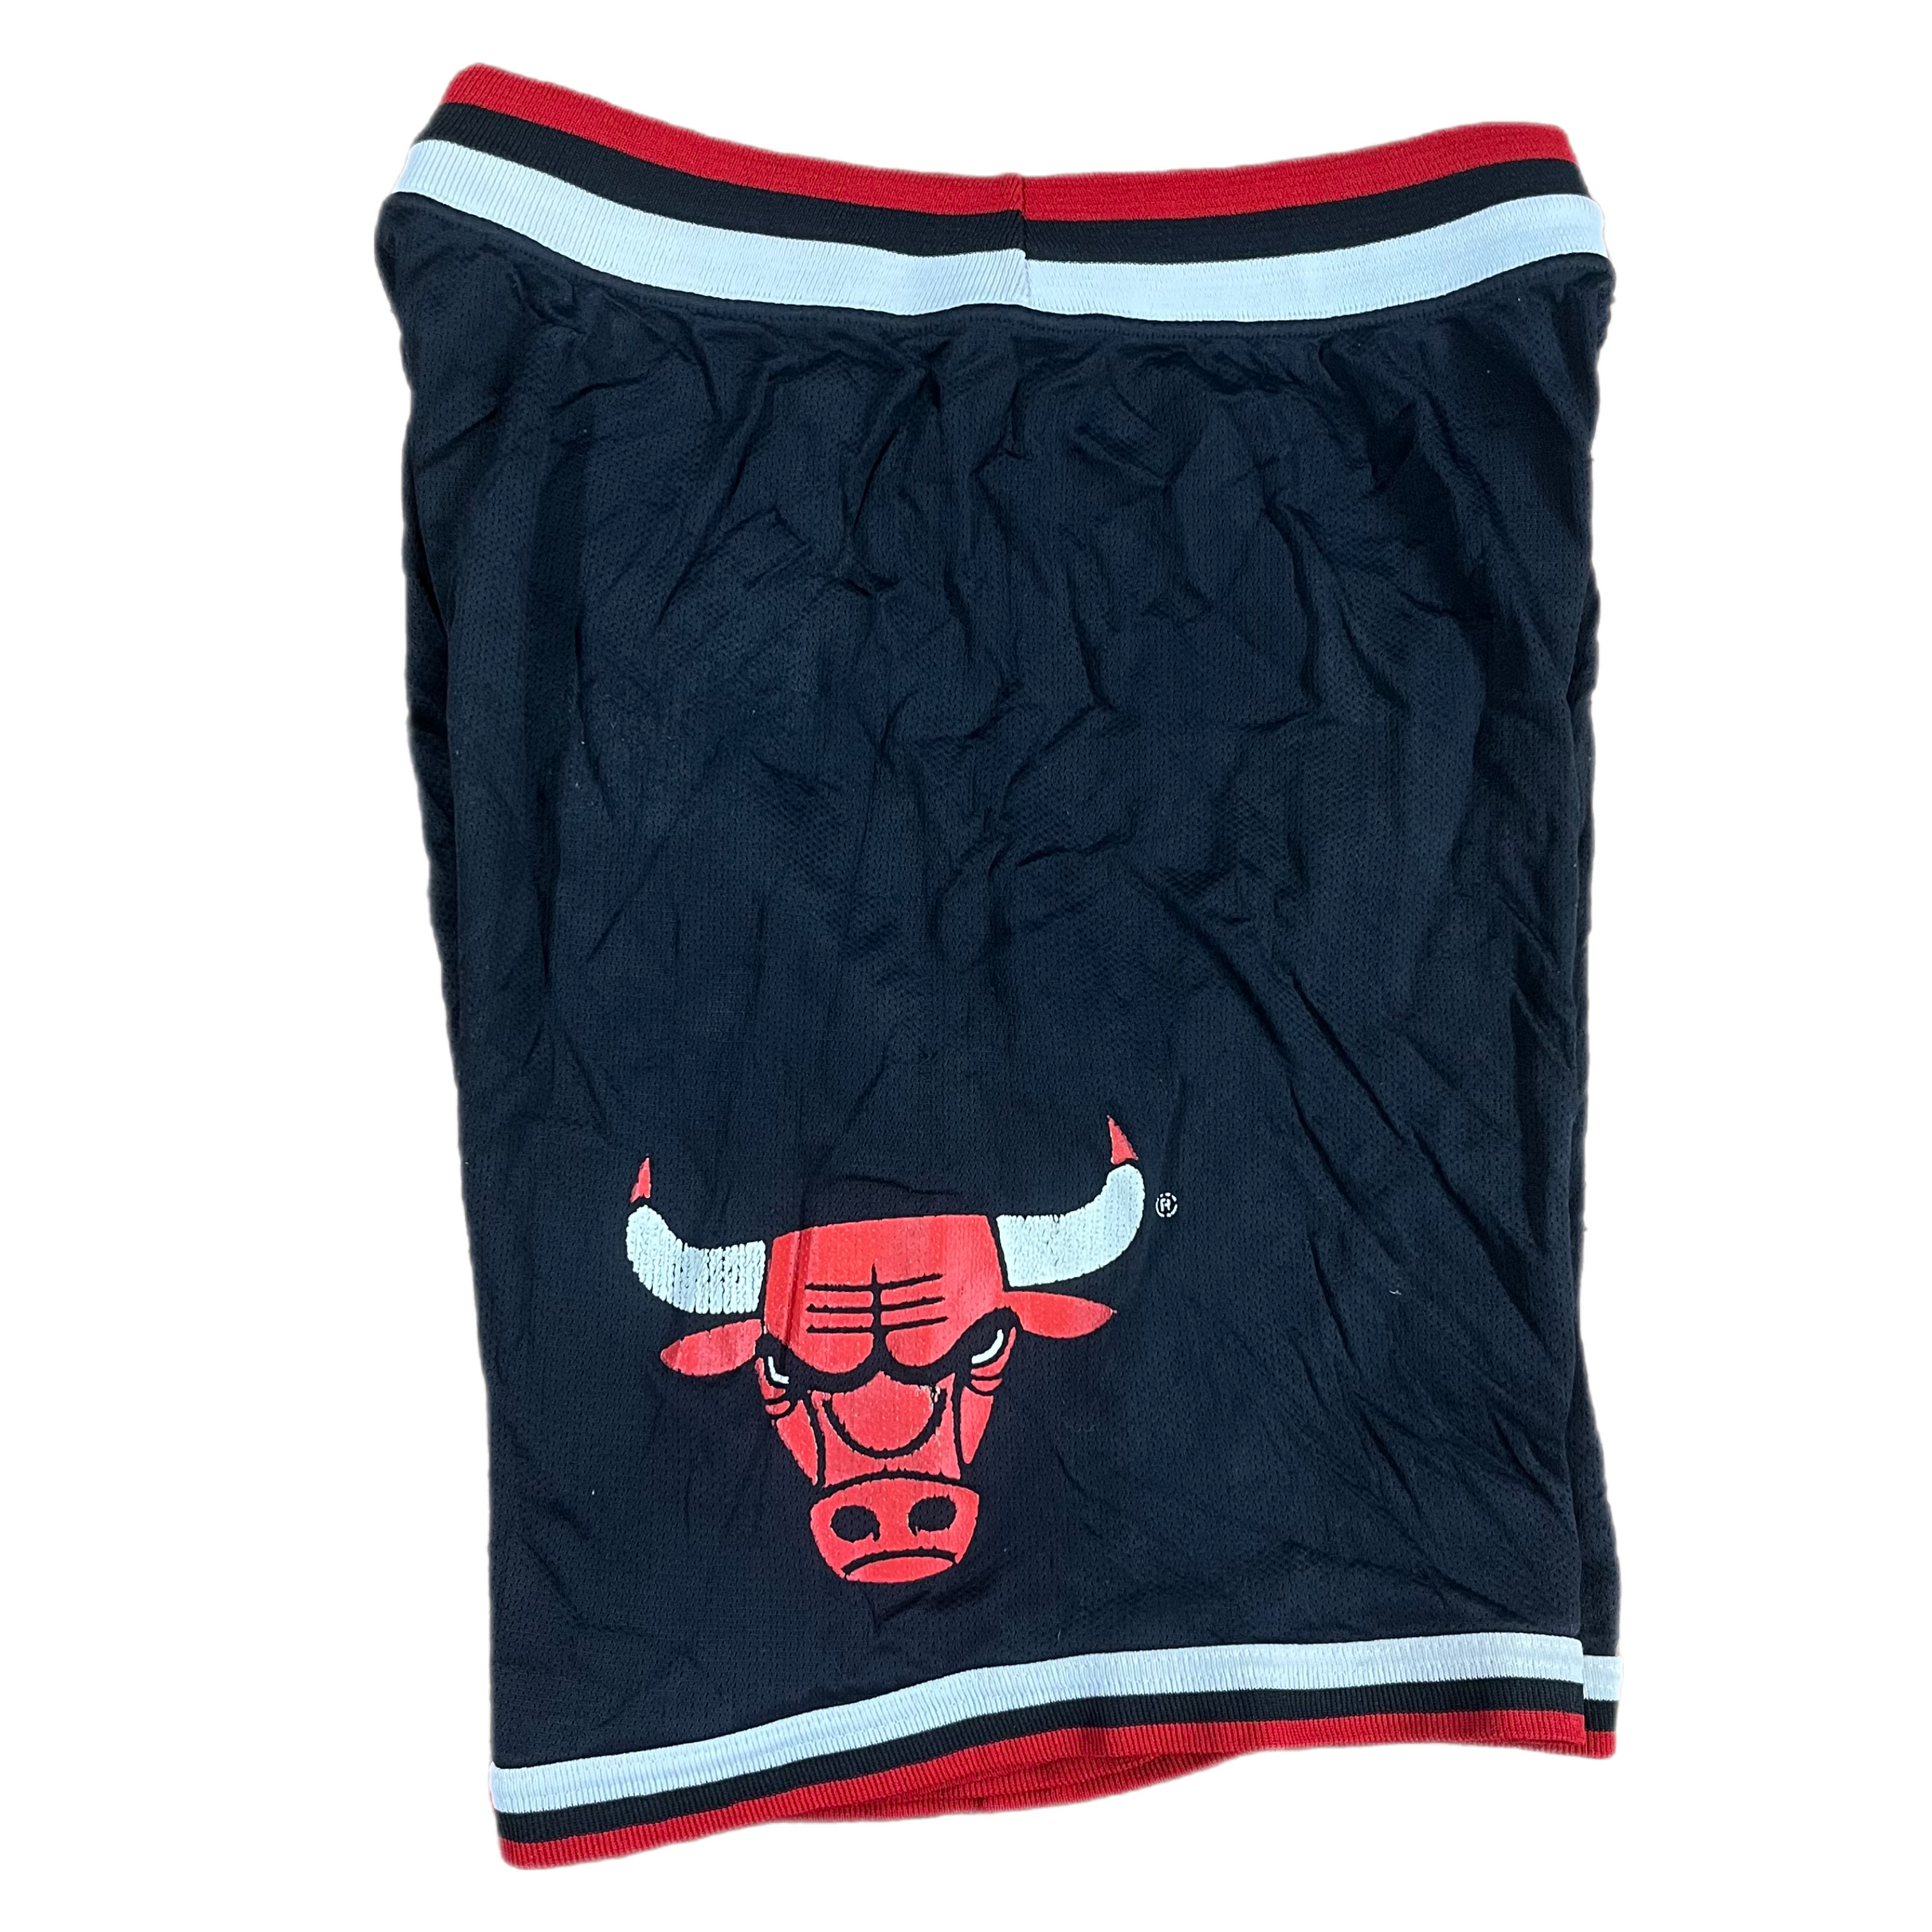 Vintage 90s Chicago Bulls Champion Red Basketball Shorts Size Medium –  Astro Vintage